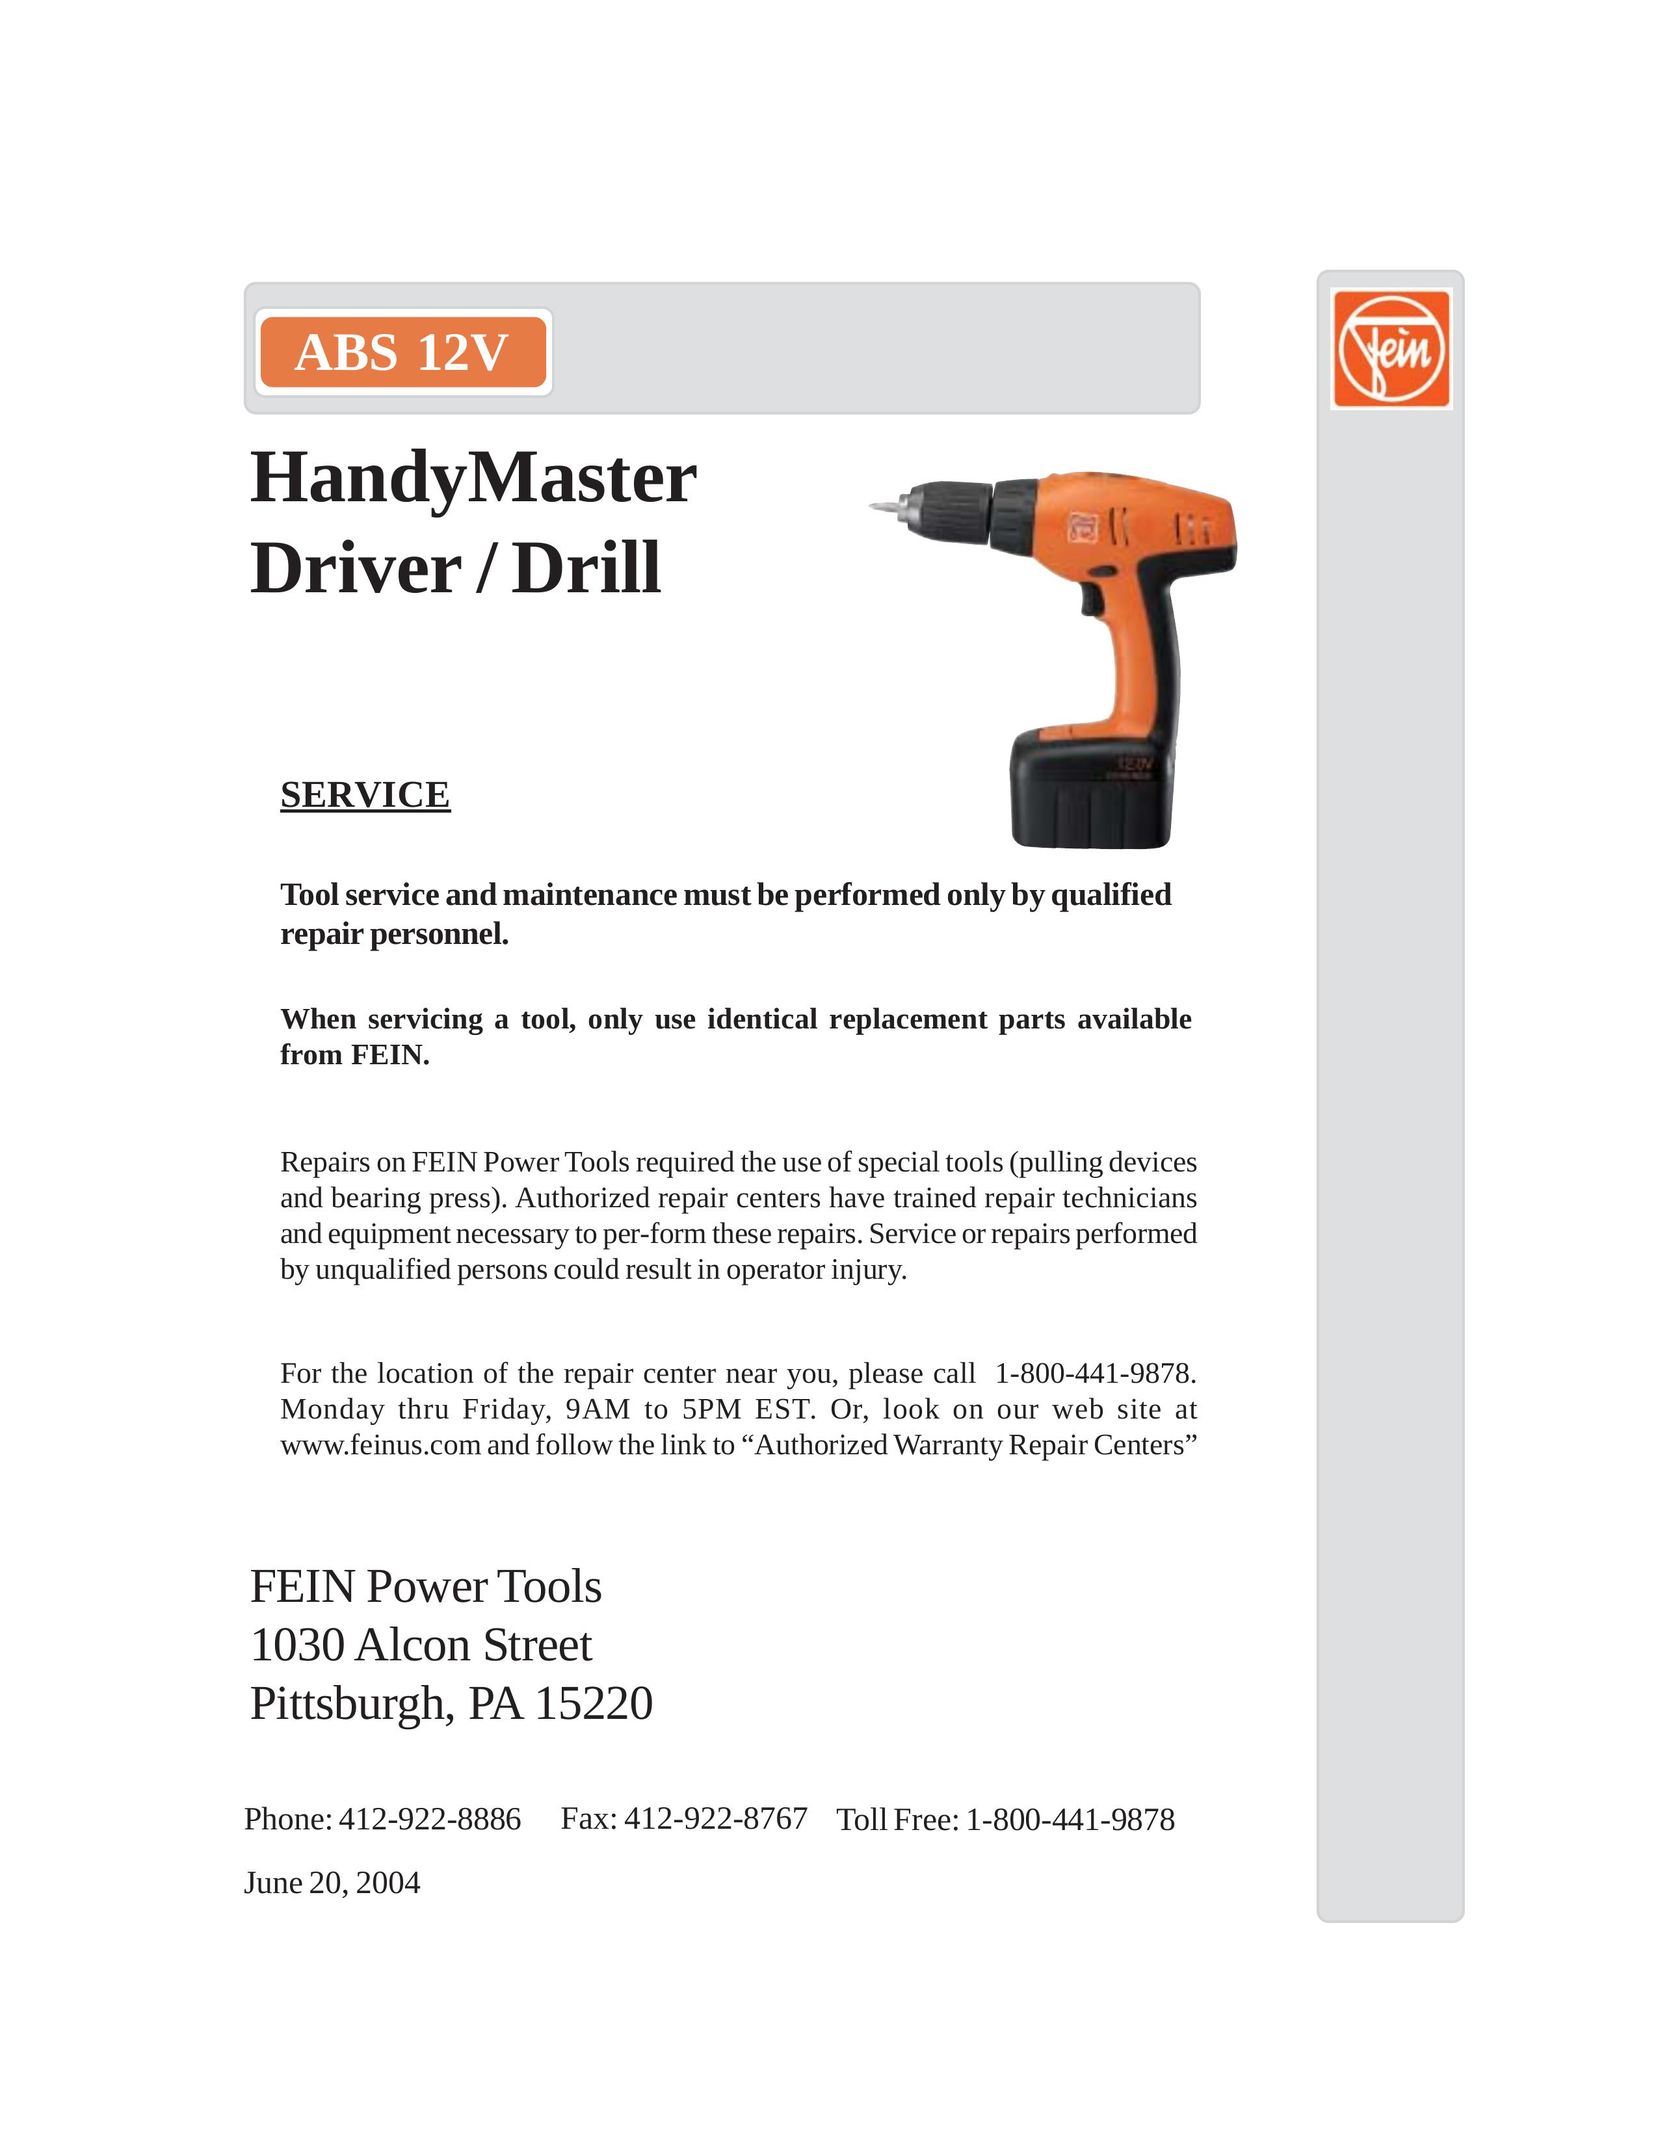 FEIN Power Tools ABS 12V Drill User Manual